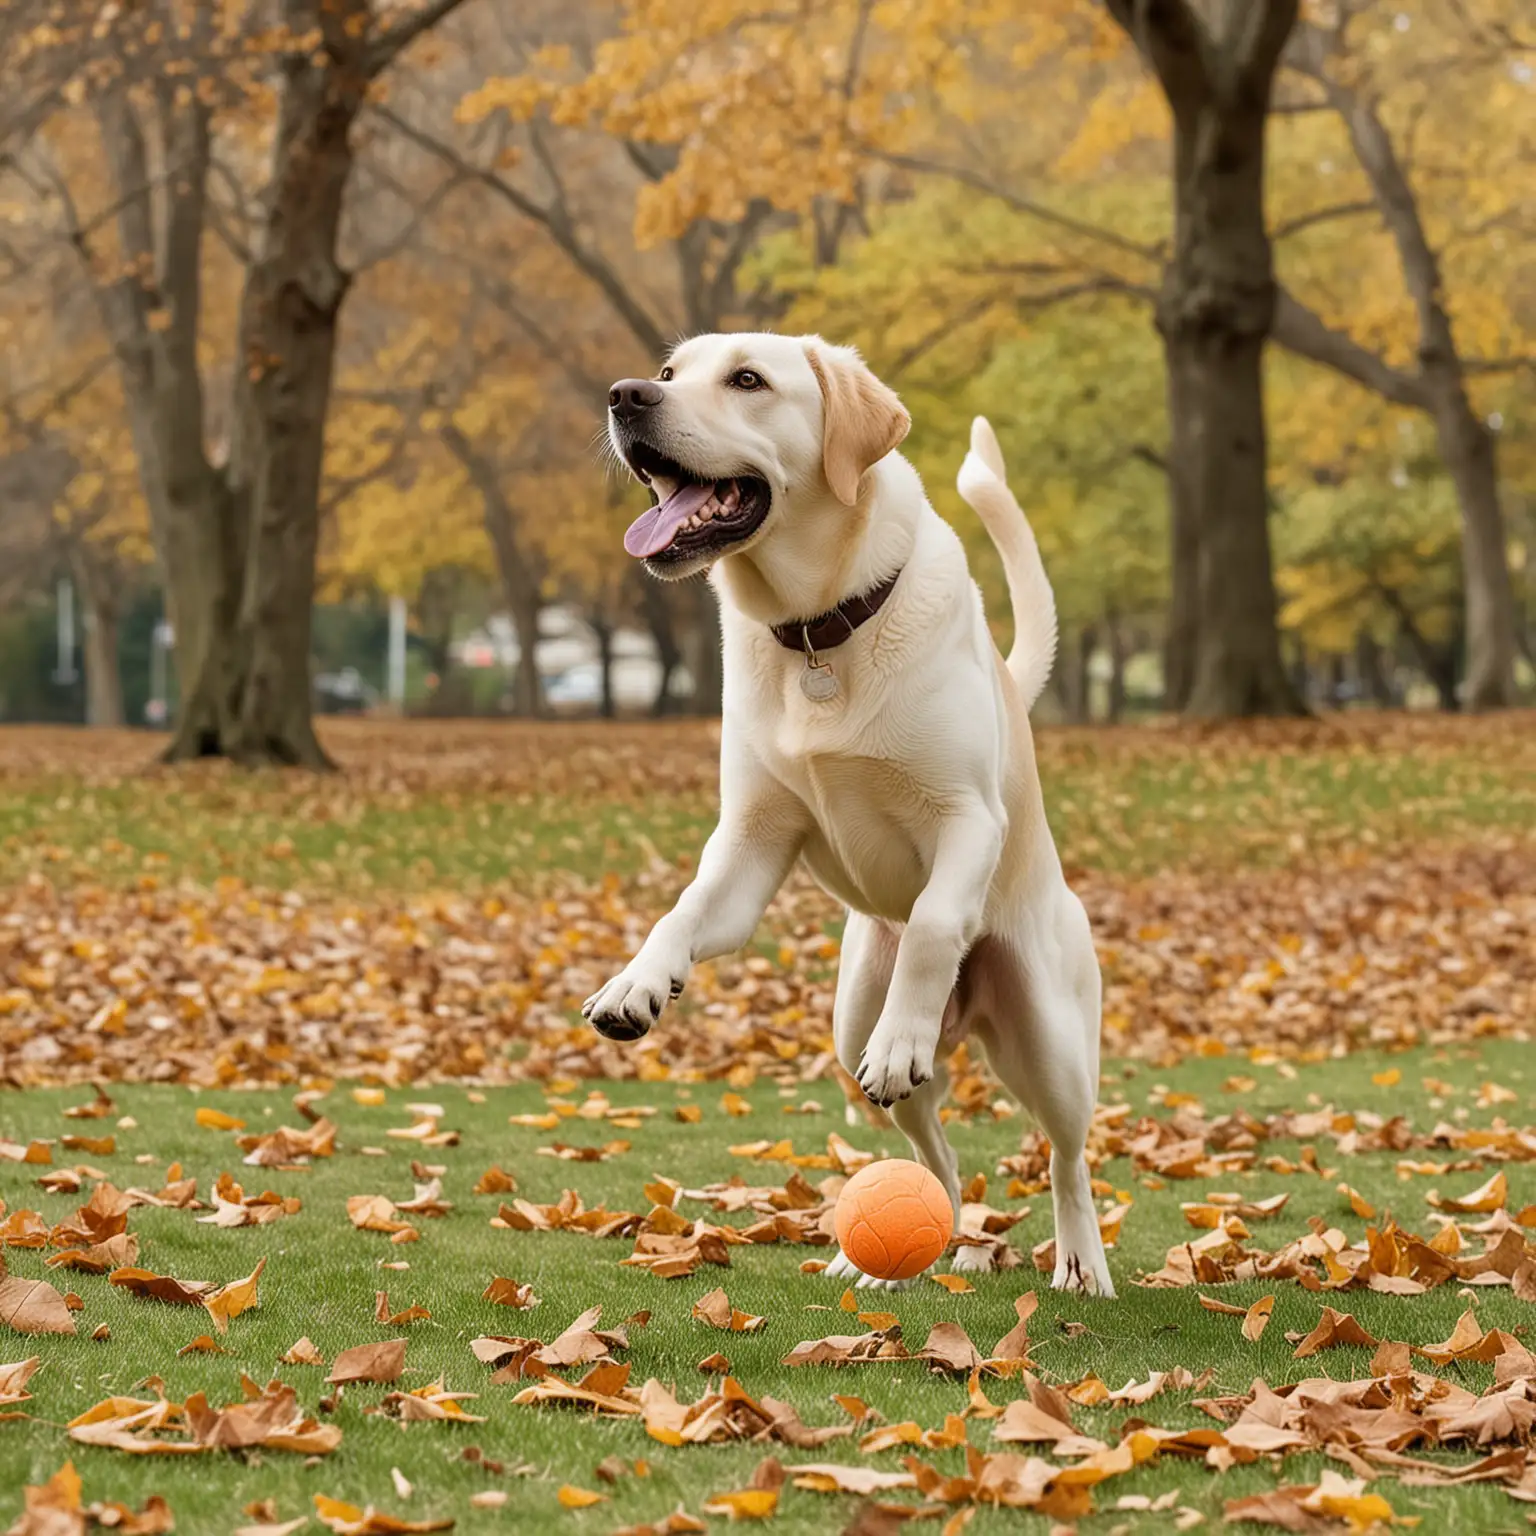 Playful Labrador Retriever Fetching Ball in Vibrant Park Setting